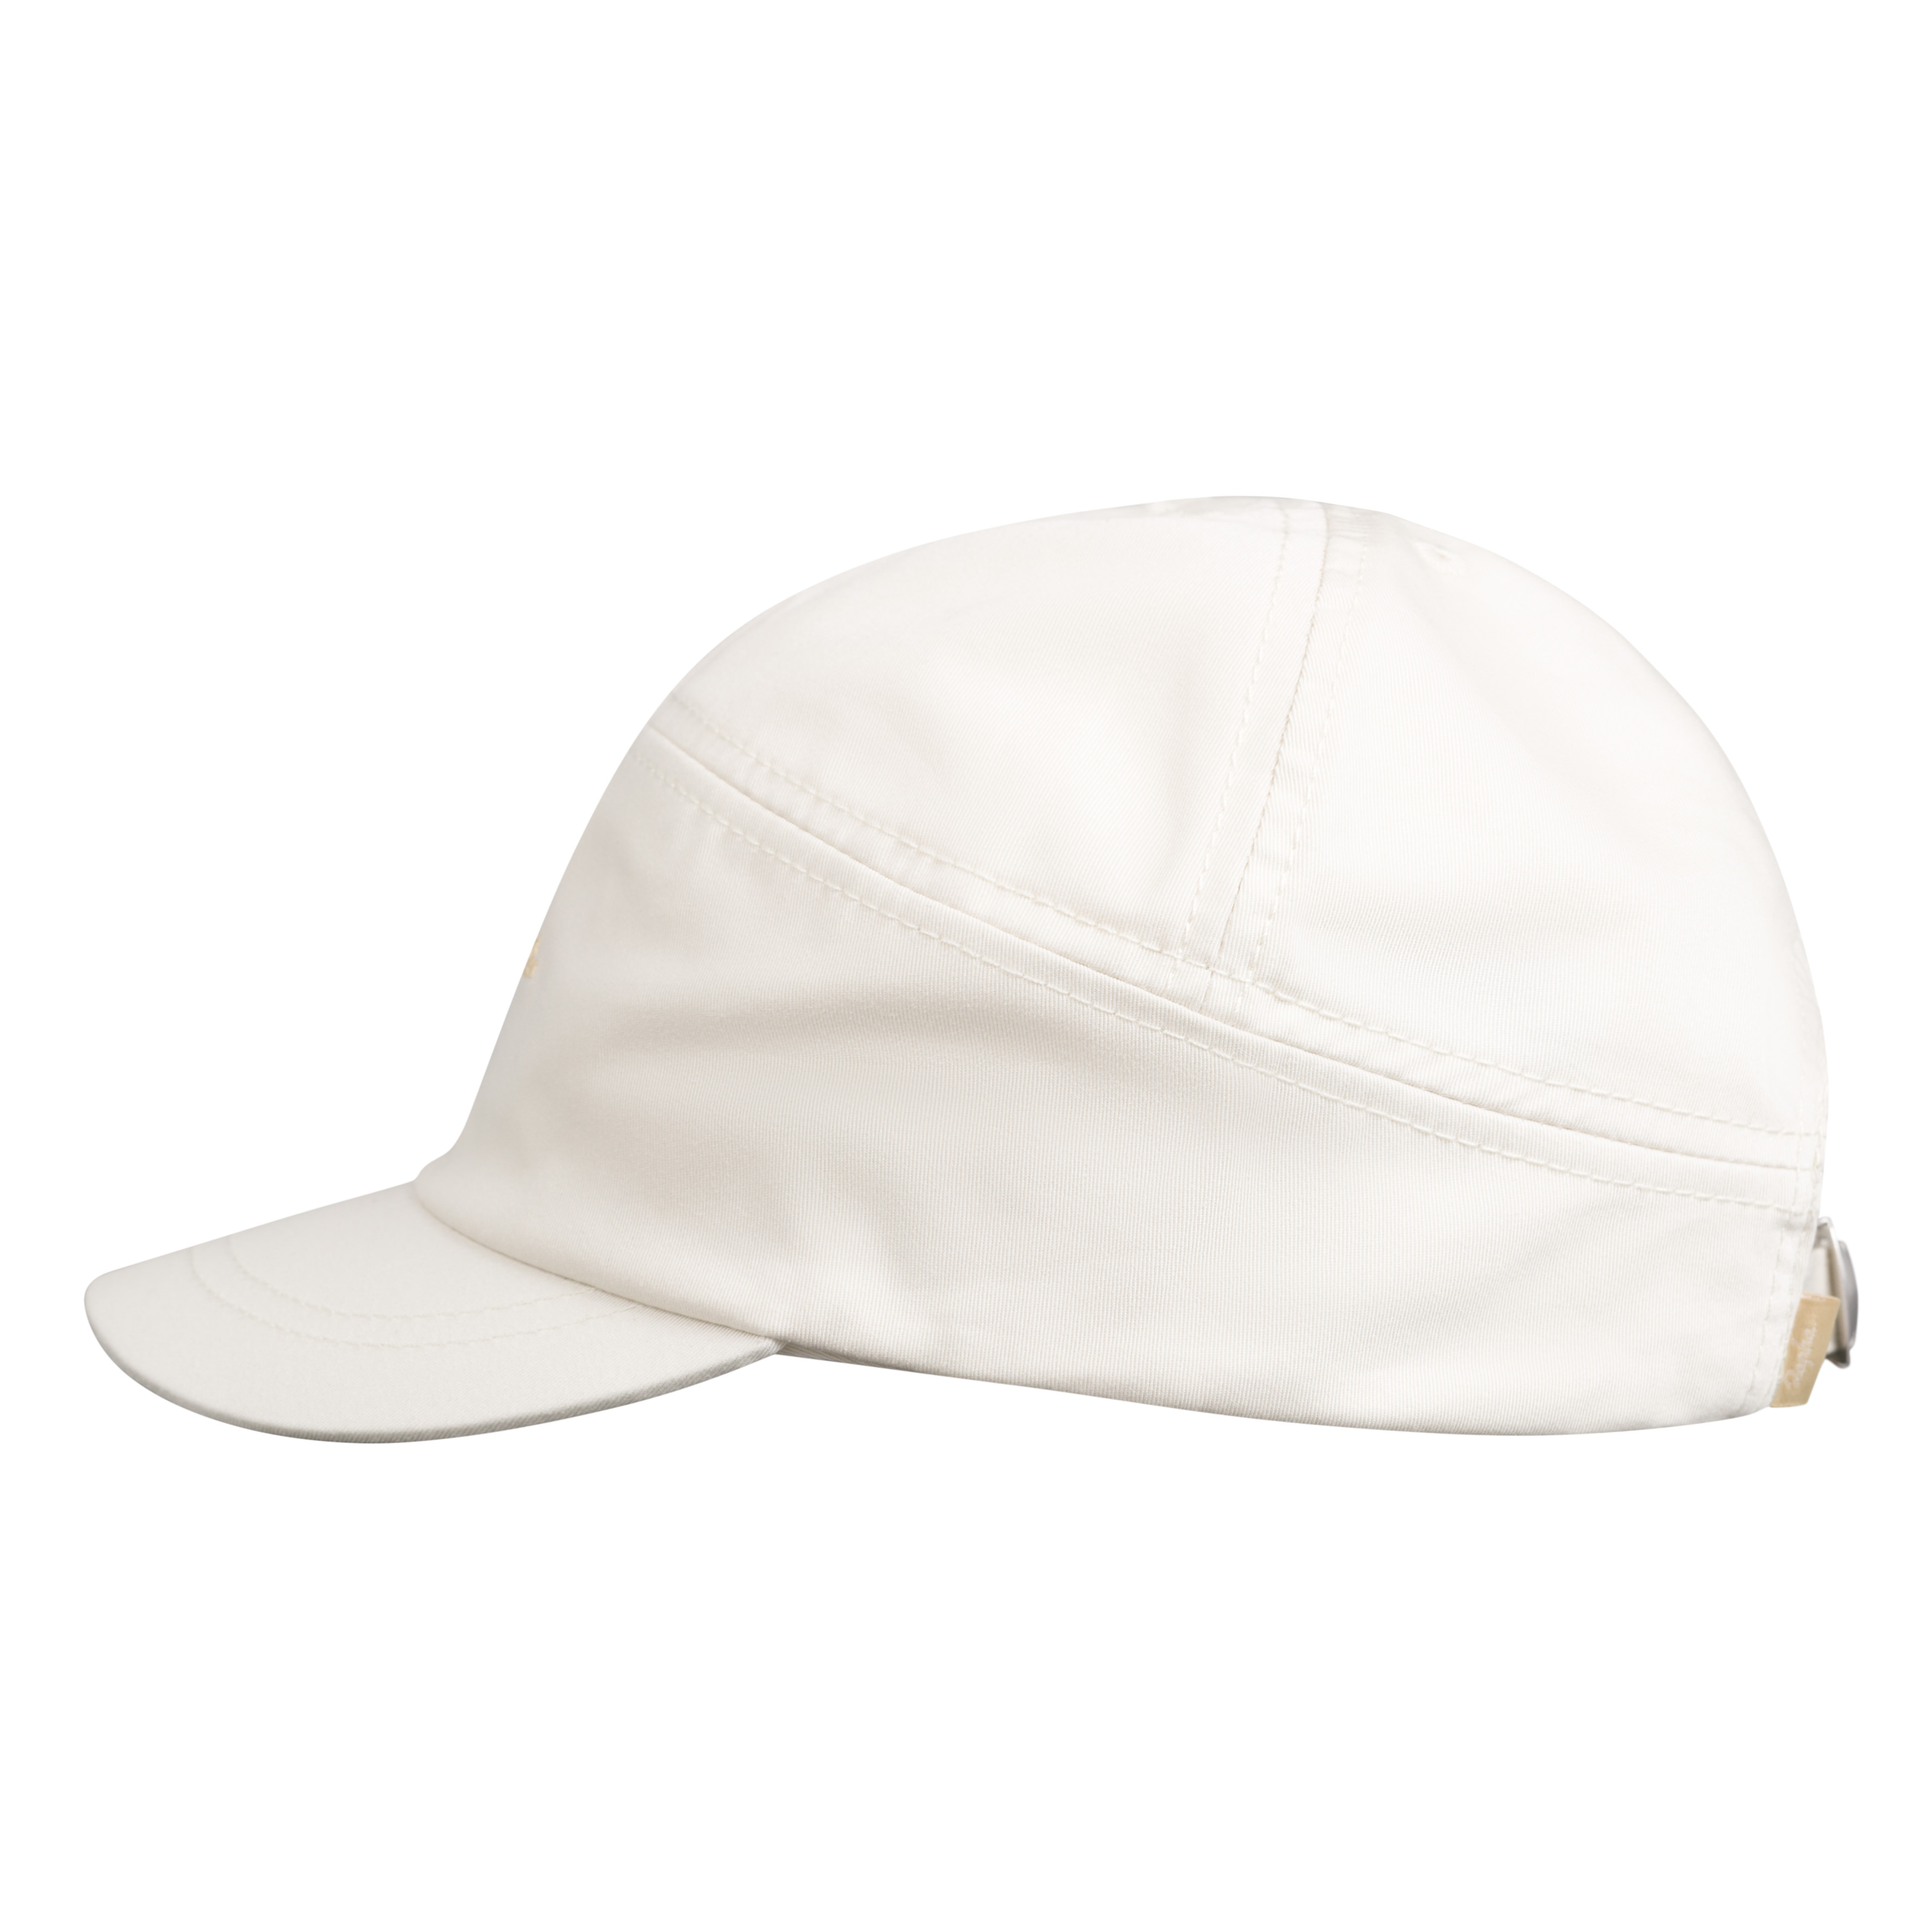 RAPALA white on tie dye green Hat Cap Strap Buckle Signature Brand EUC